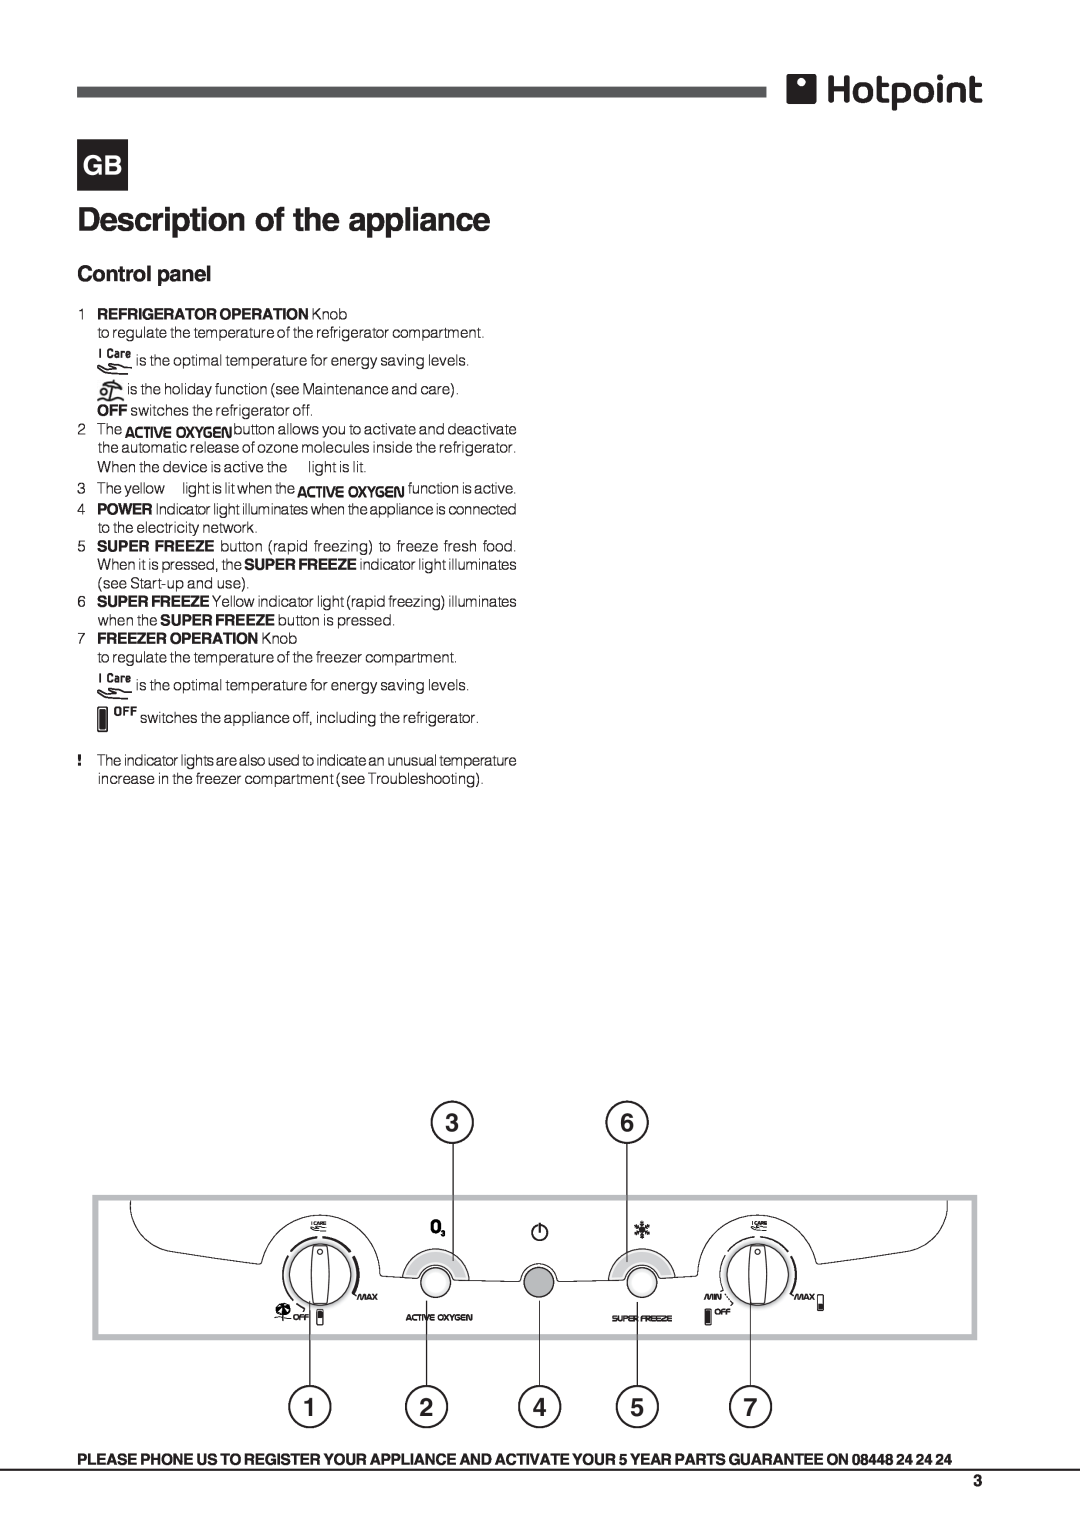 Hotpoint FFL xxxx x O3 Description of the appliance, Control panel, REFRIGERATOR OPERATION Knob, FREEZER OPERATION Knob 